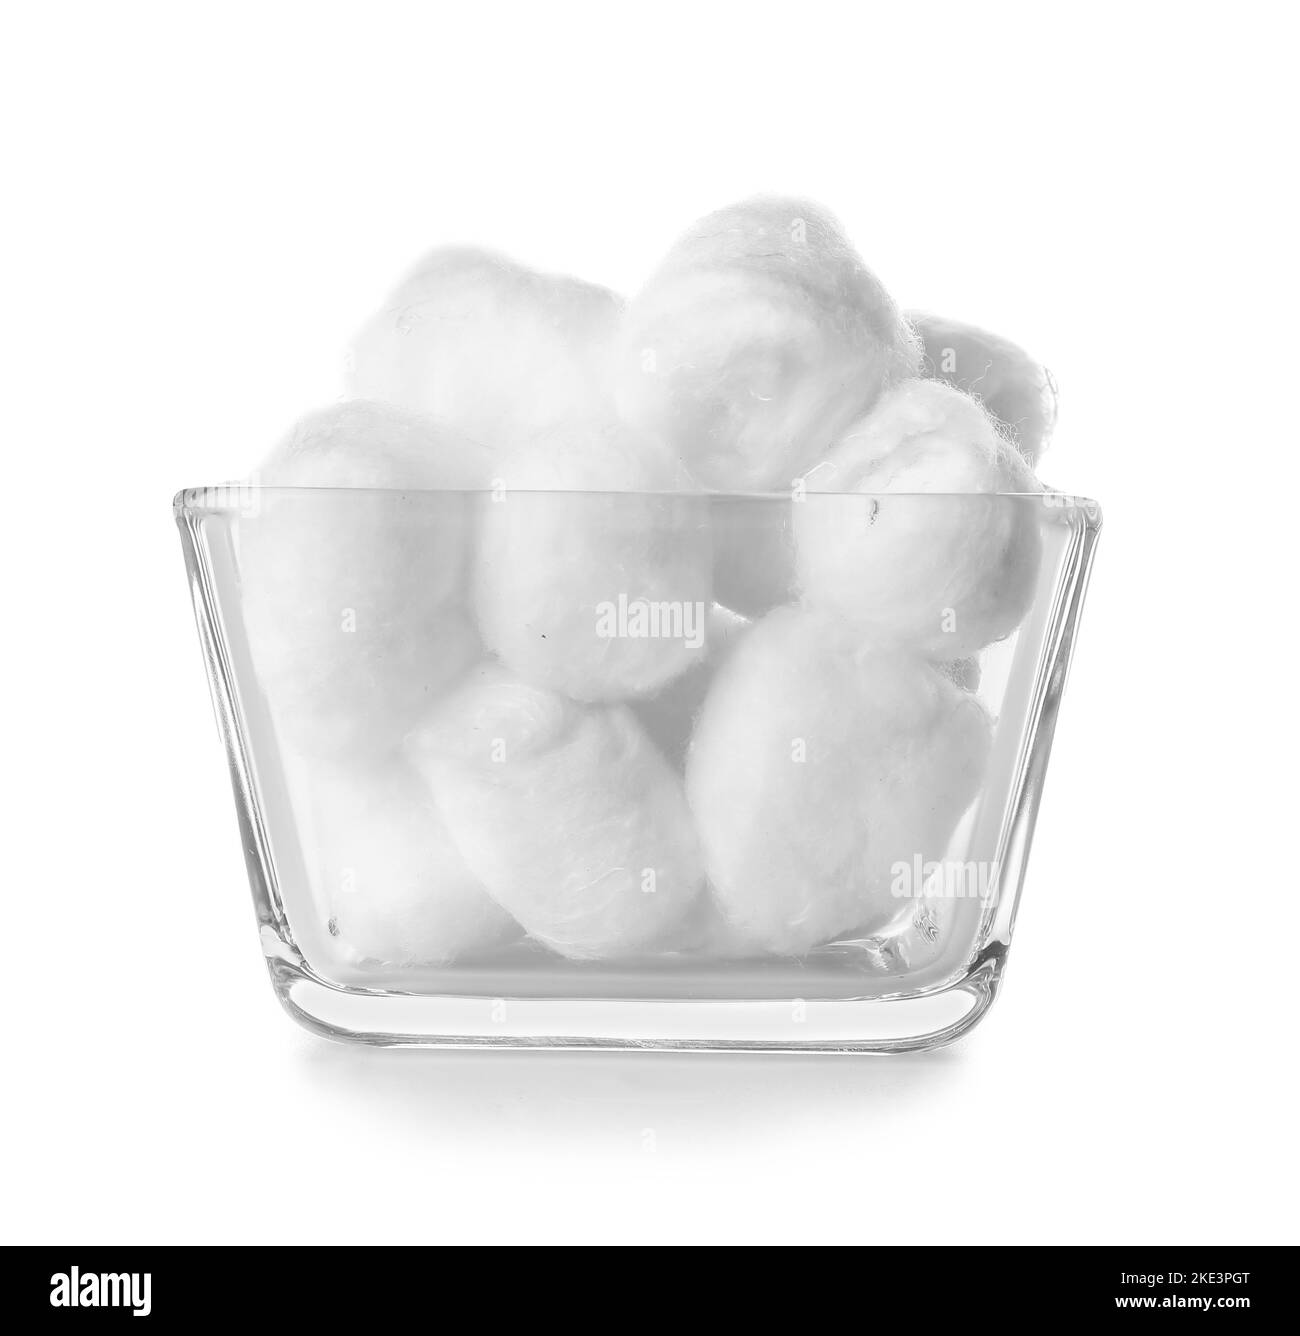 Bowl of soft cotton balls on white background Stock Photo